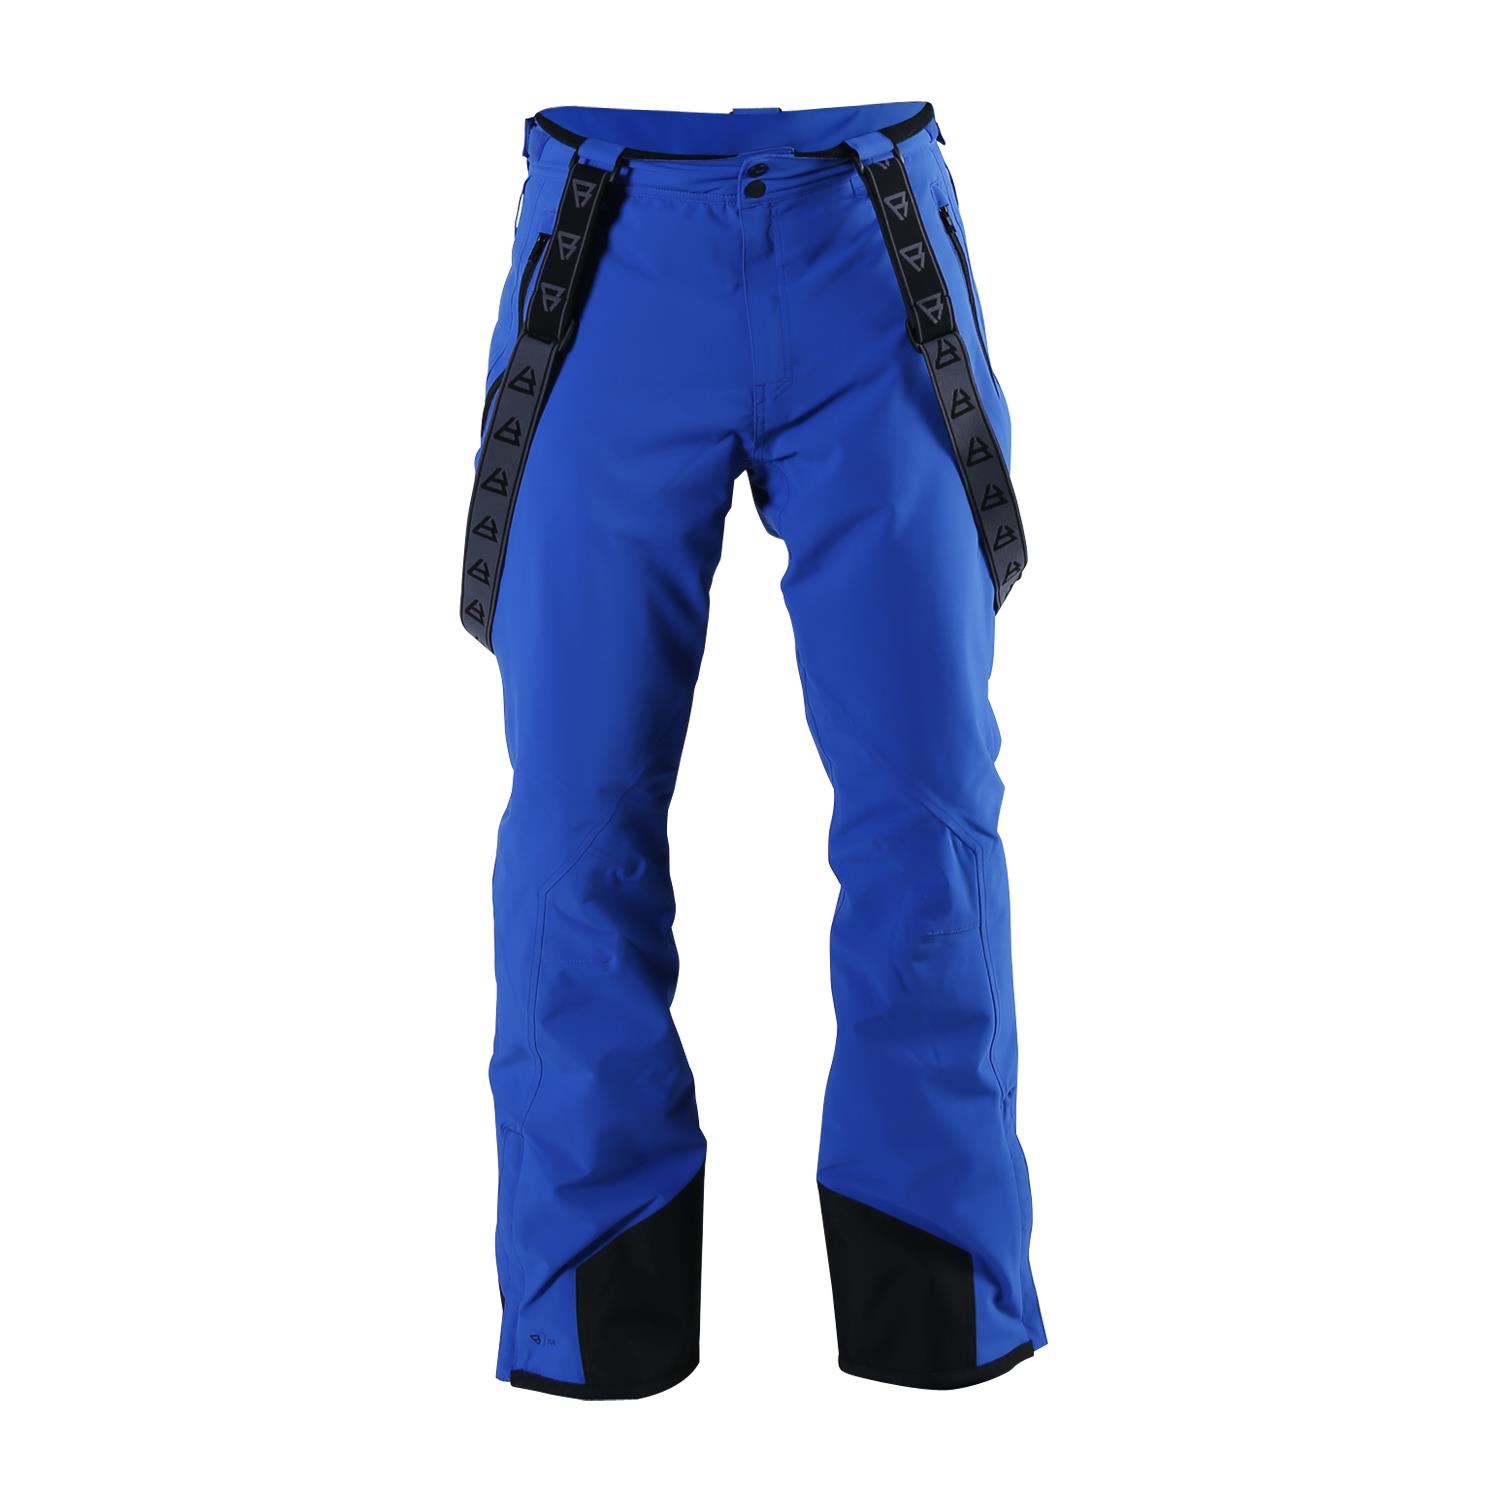 Details about   Brunotti ski snowboard pants trousers functional blau damiro 15k straps show original title